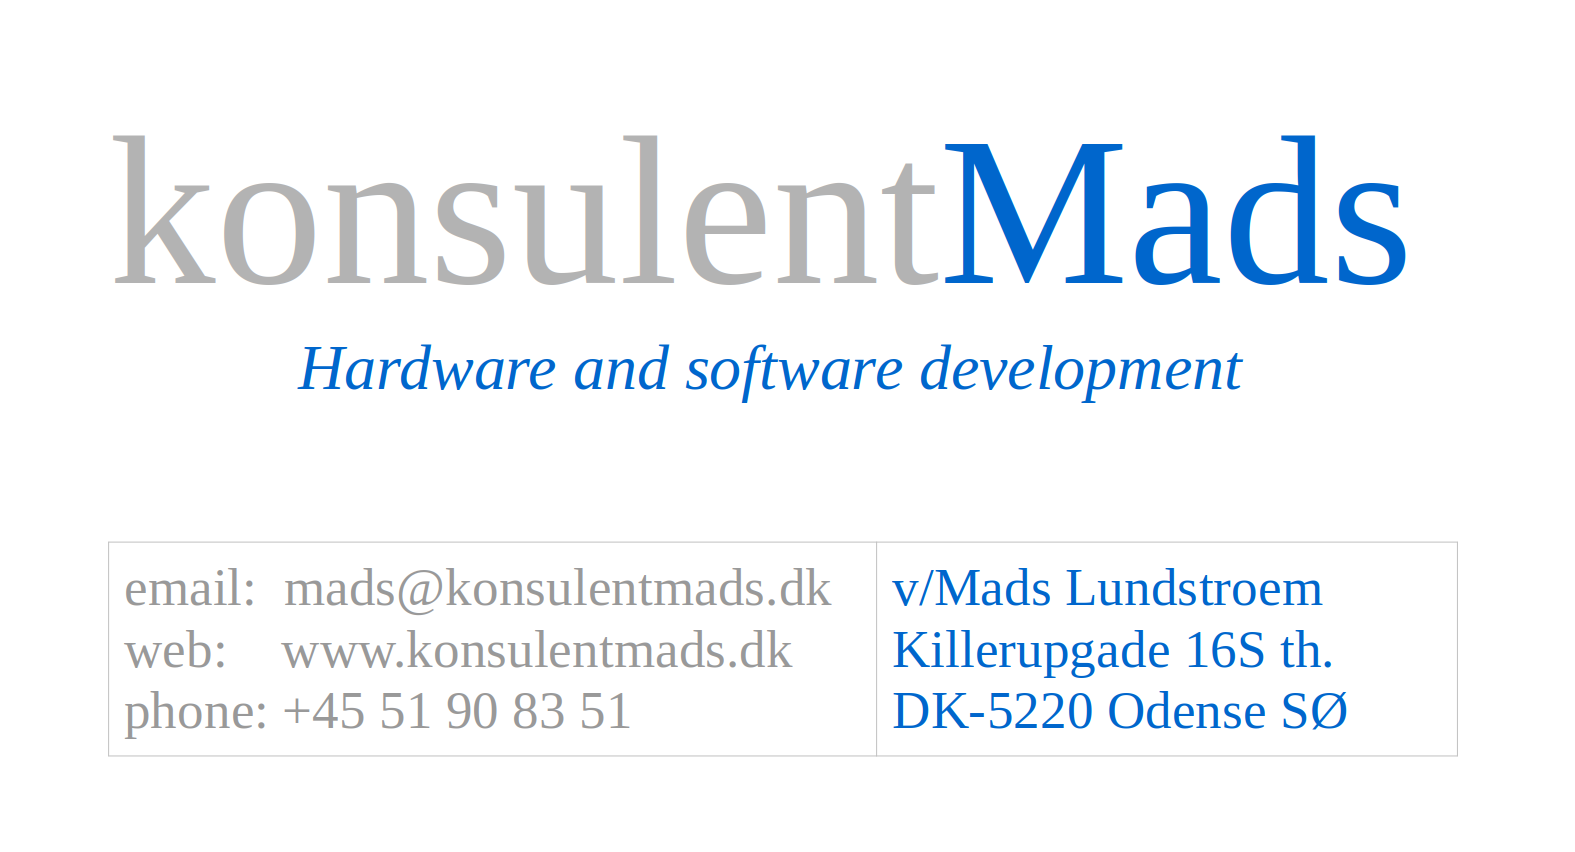 konsulentMads business card